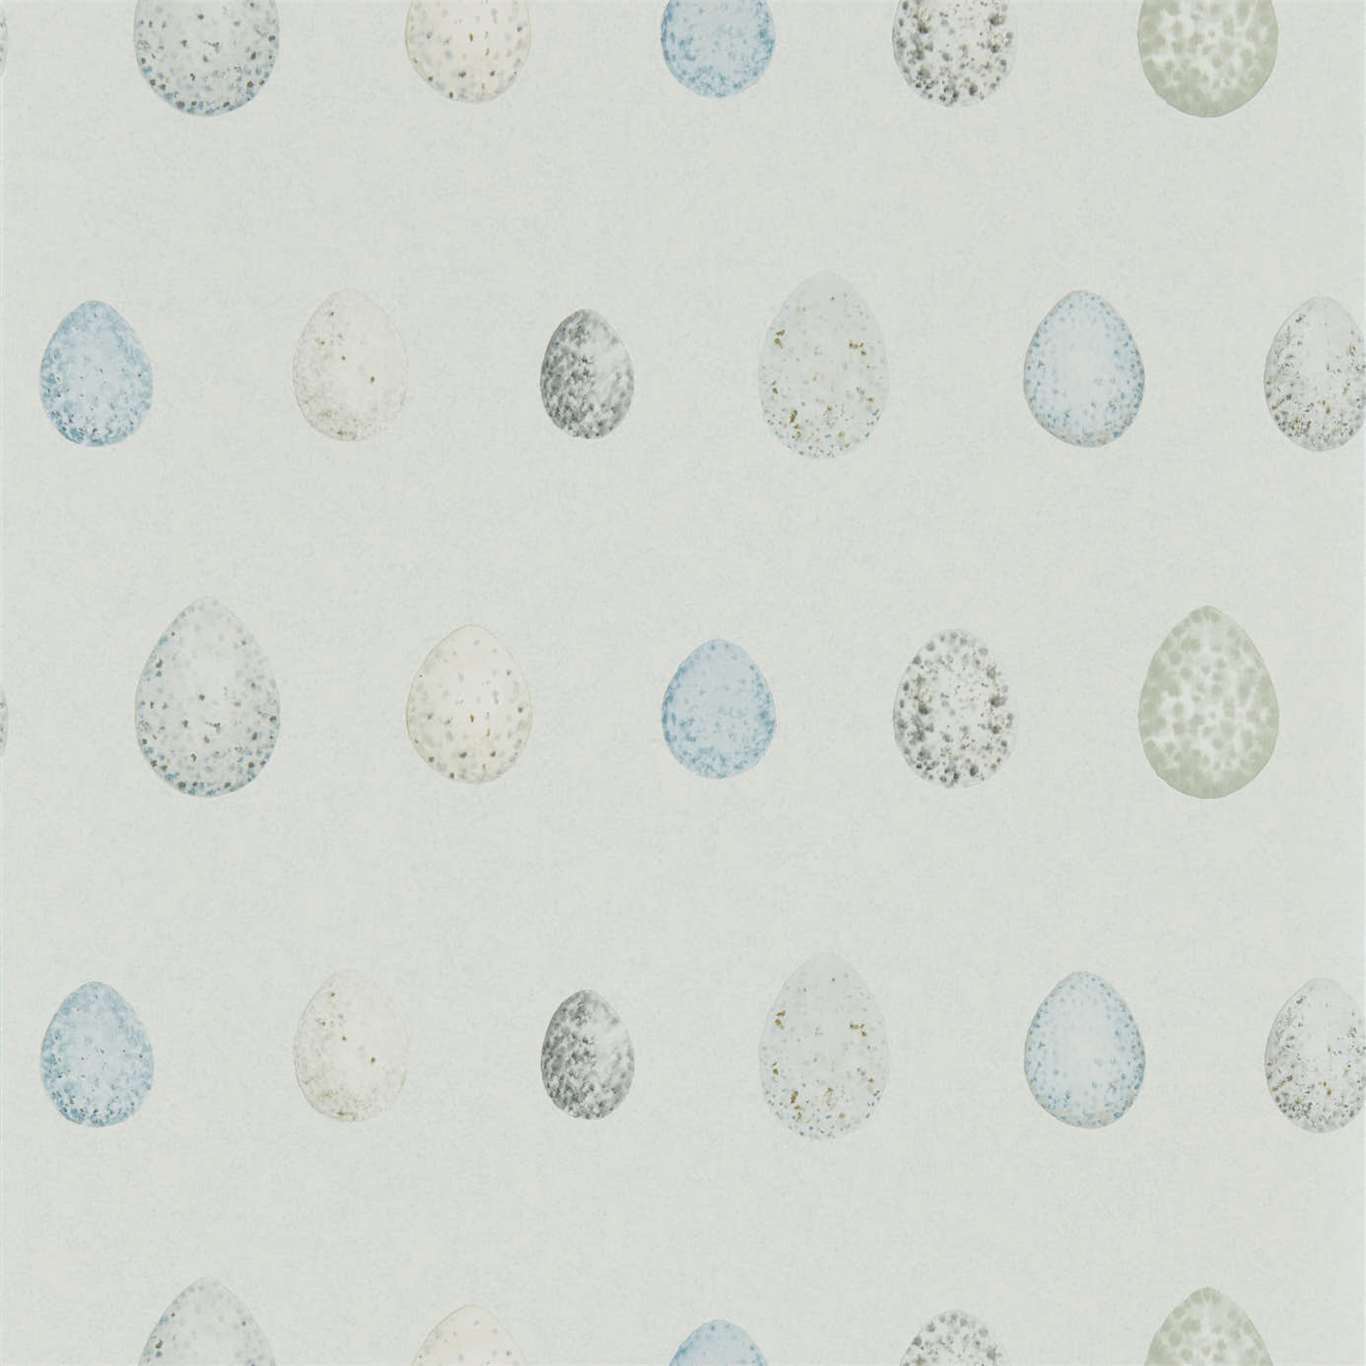 Nest Egg Marine Aqua Wallpaper DEBB216504 by Sanderson